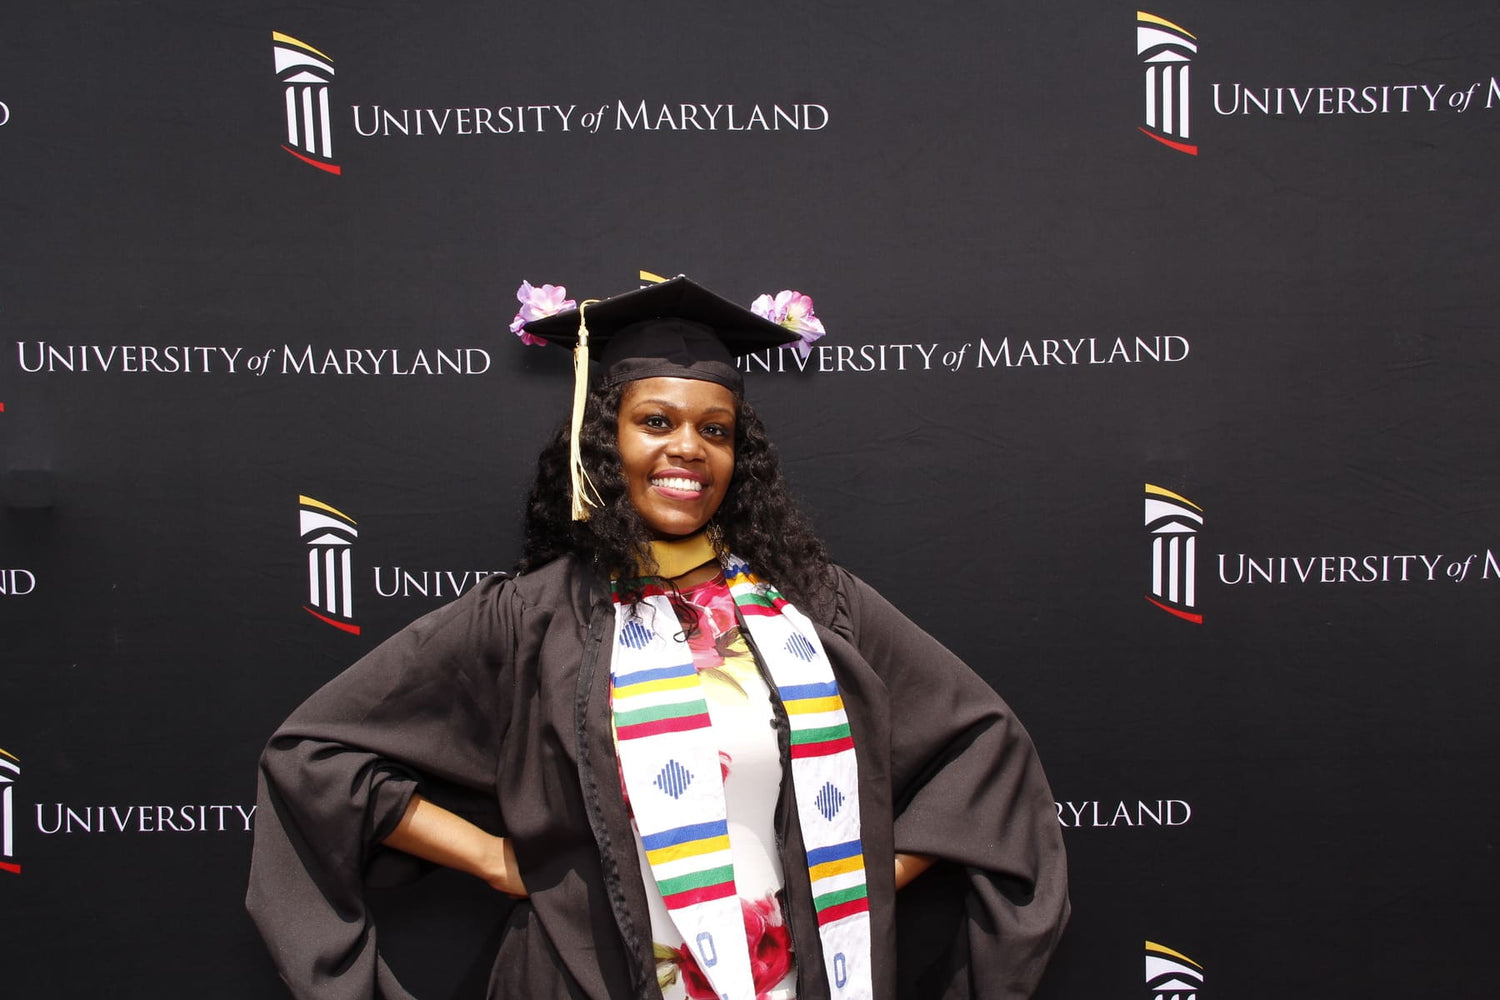 University of Maryland Graduation Photo Booth